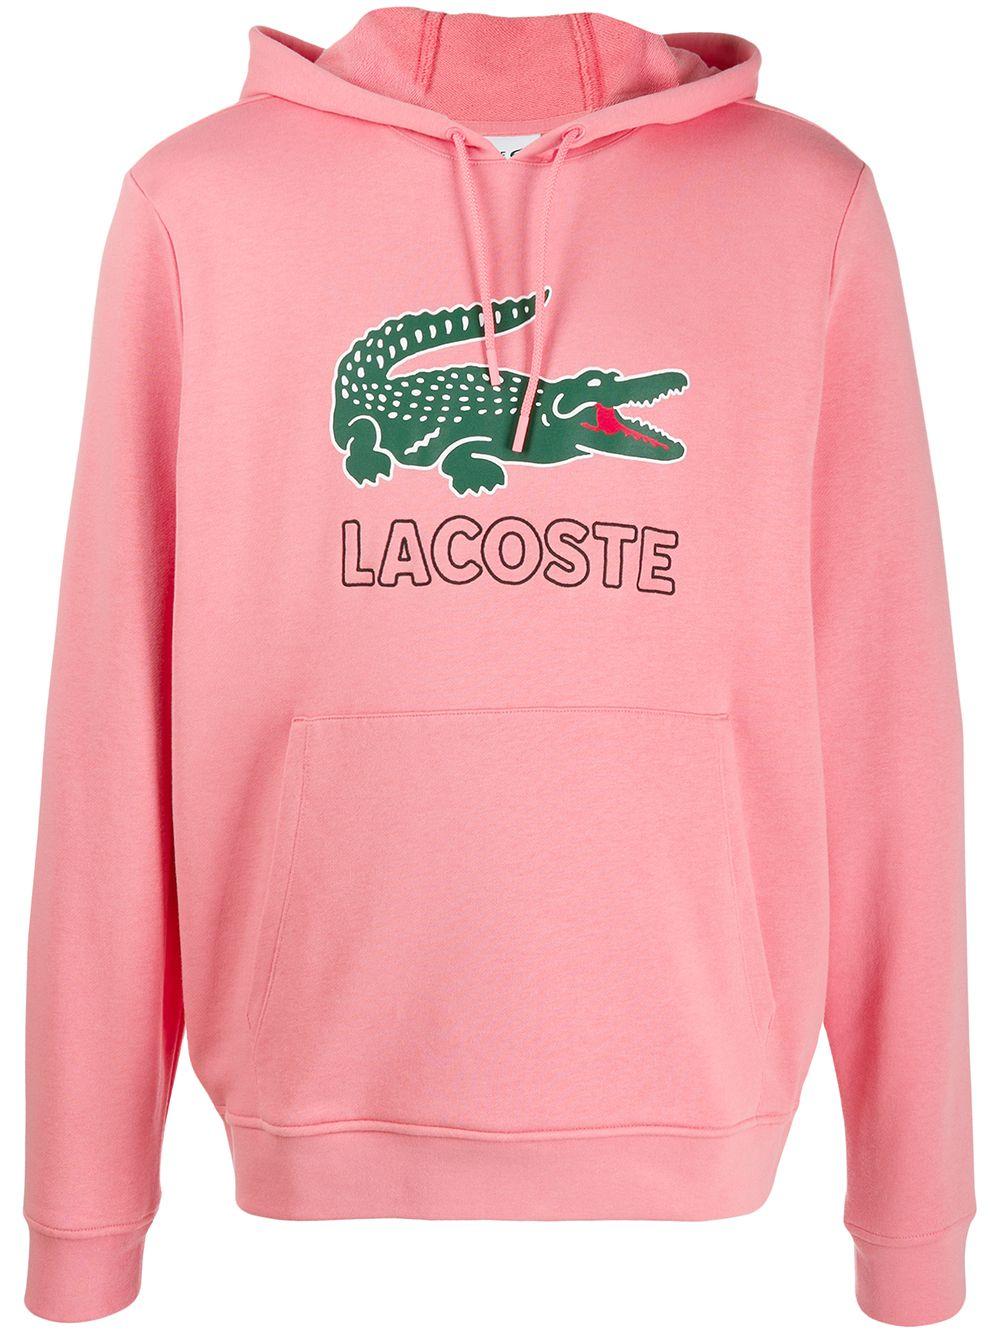 lacoste sweatshirt pink